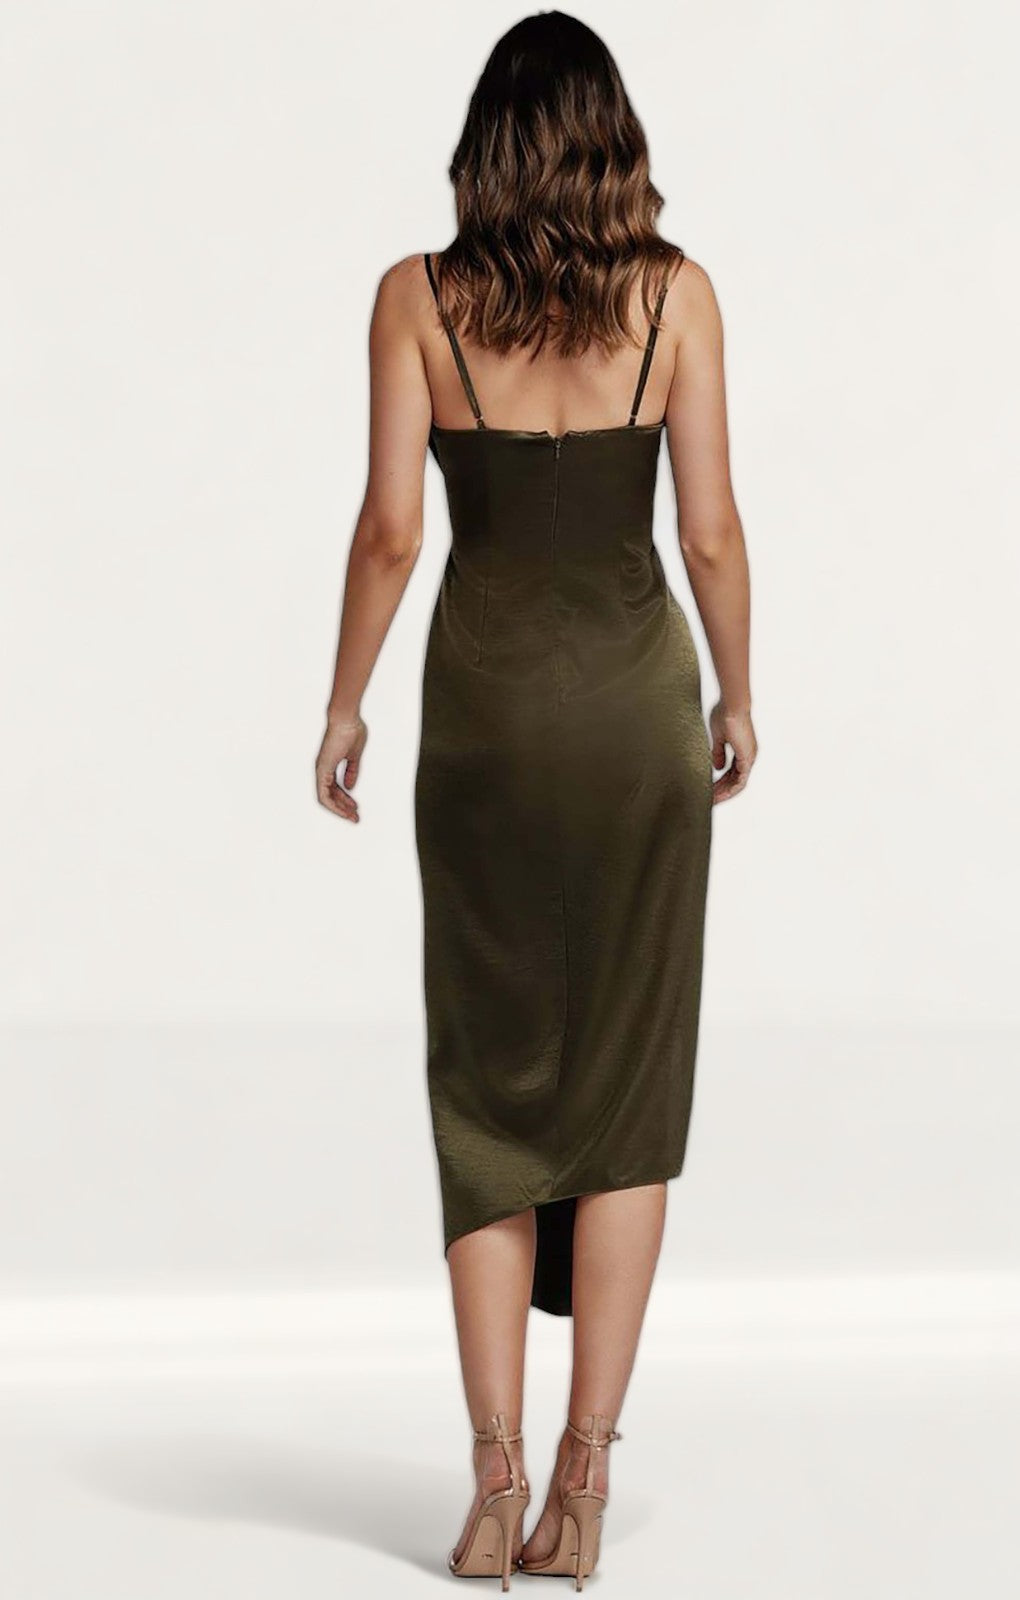 Lexi Carmen Olive Green Dress product image